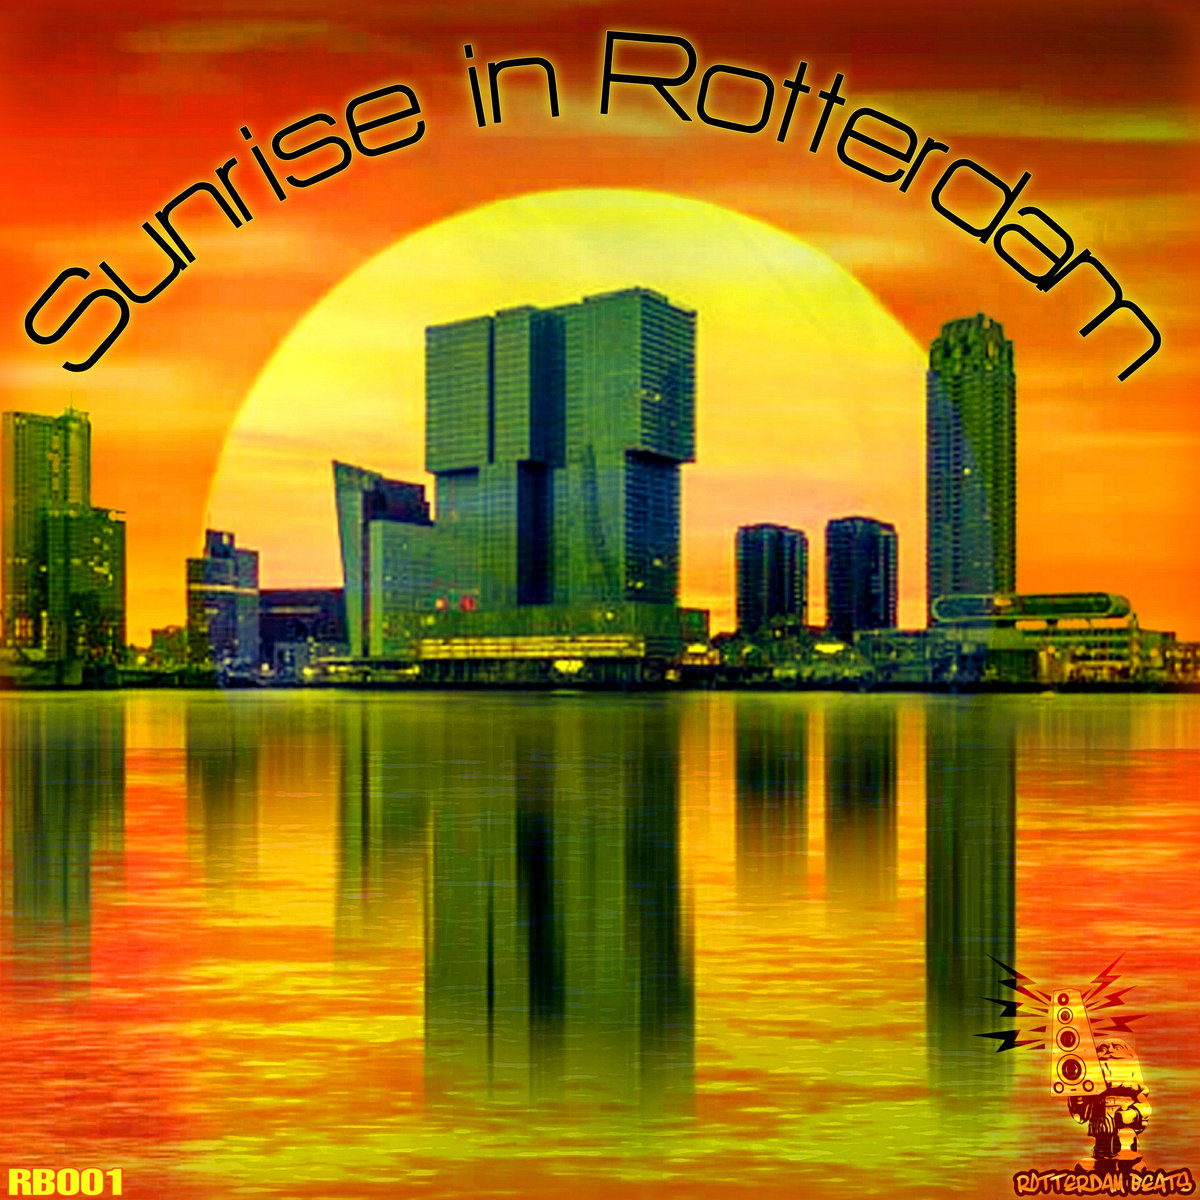 Sunrise in Rotterdam compilation artwork from label Rotterdam Beats.